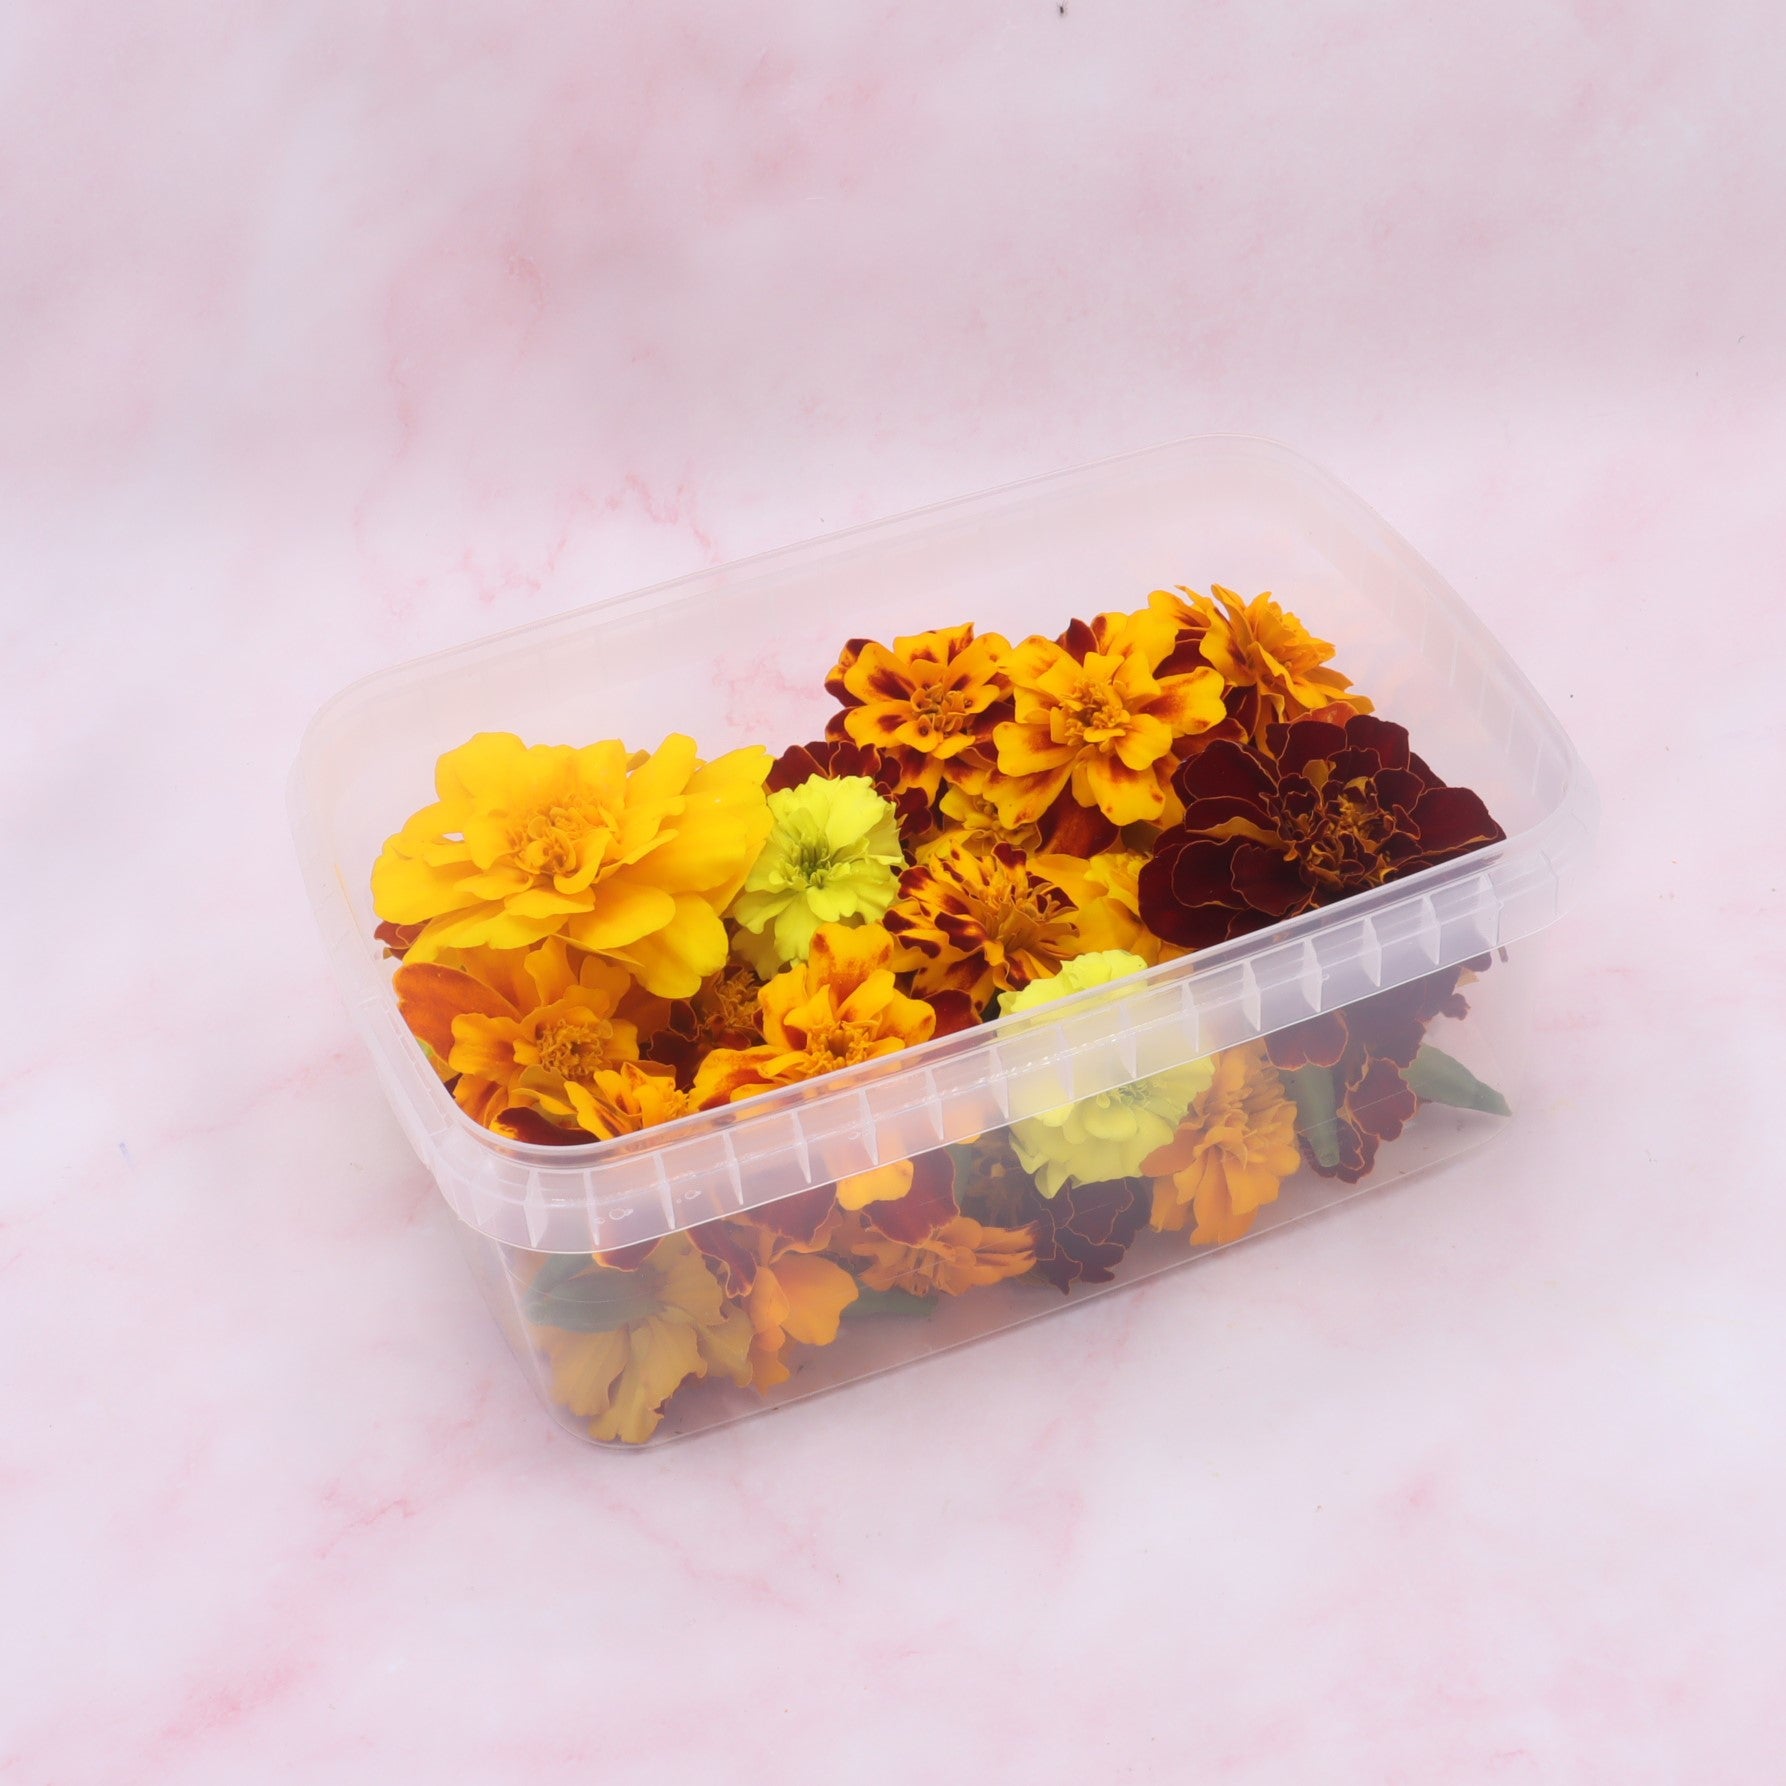 Eetbare Tagetes, Marigold, Afrikaantje, eetbare bloemen, eetbare bloemenshop, floral delight